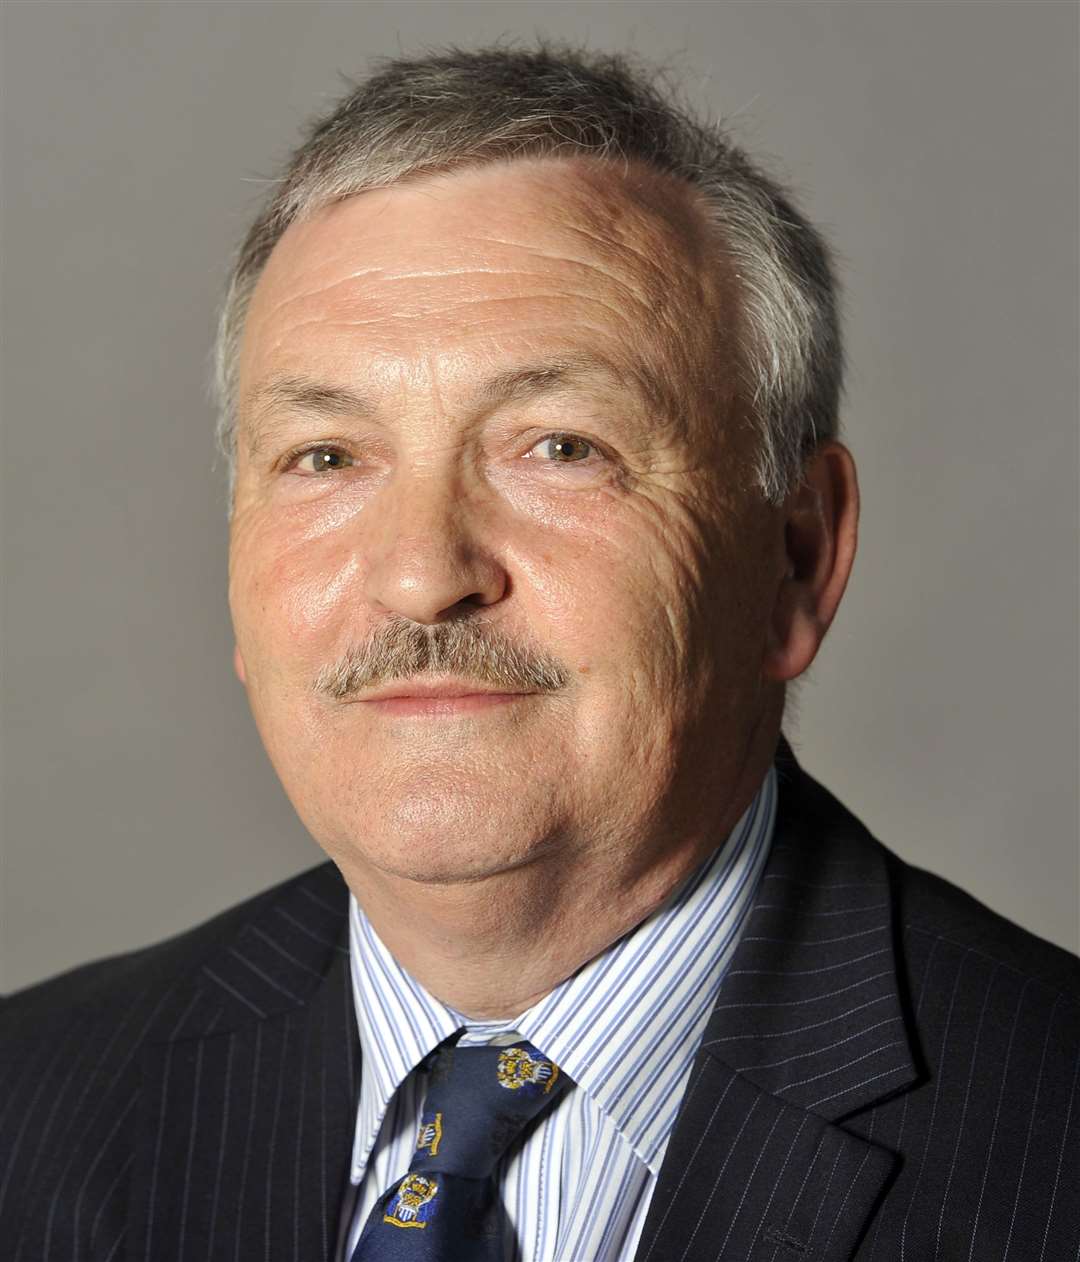 Medway Council leader Alan Jarrett said Ms Tolhurst had 'misled' the Prime Minister